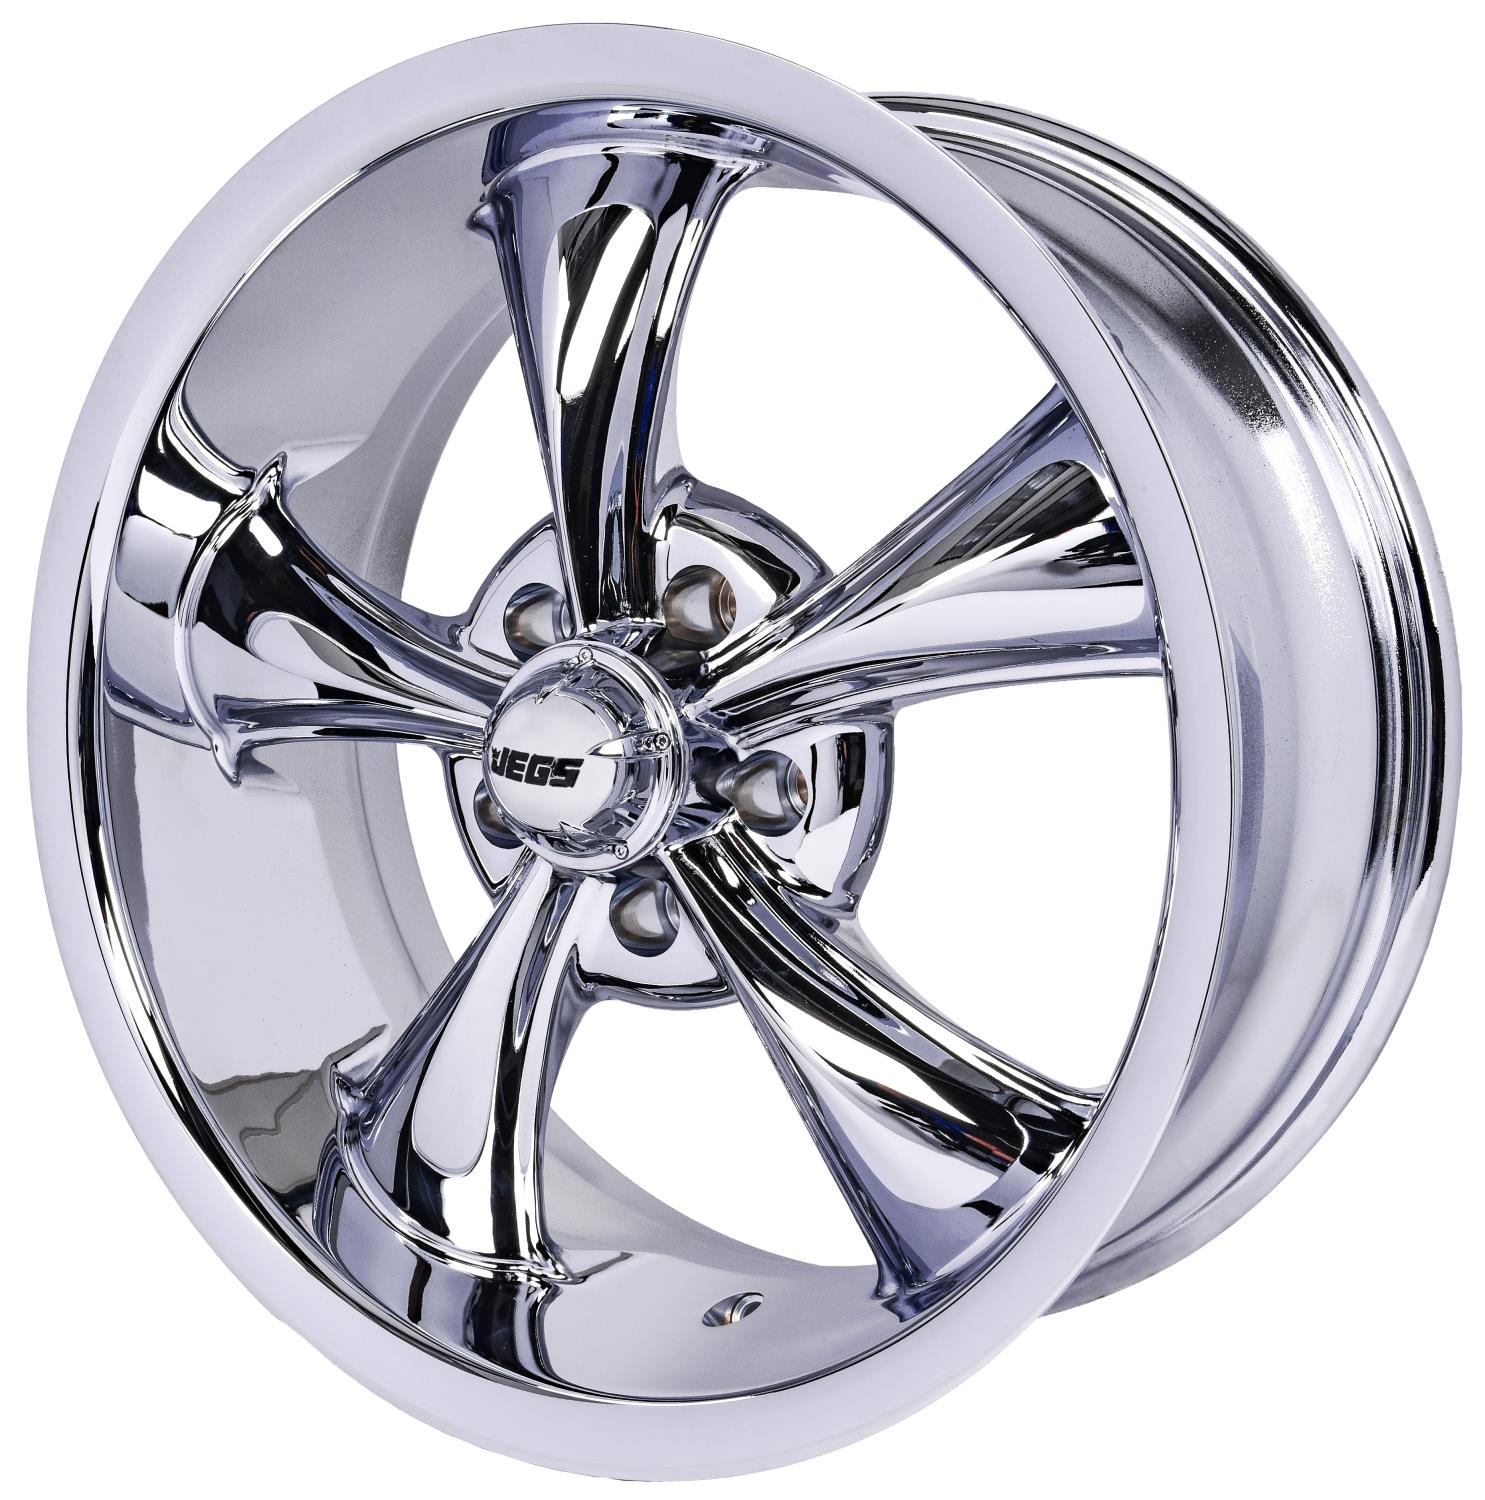 Resto-Rod Wheel [Size: 17" x 8"] Chrome